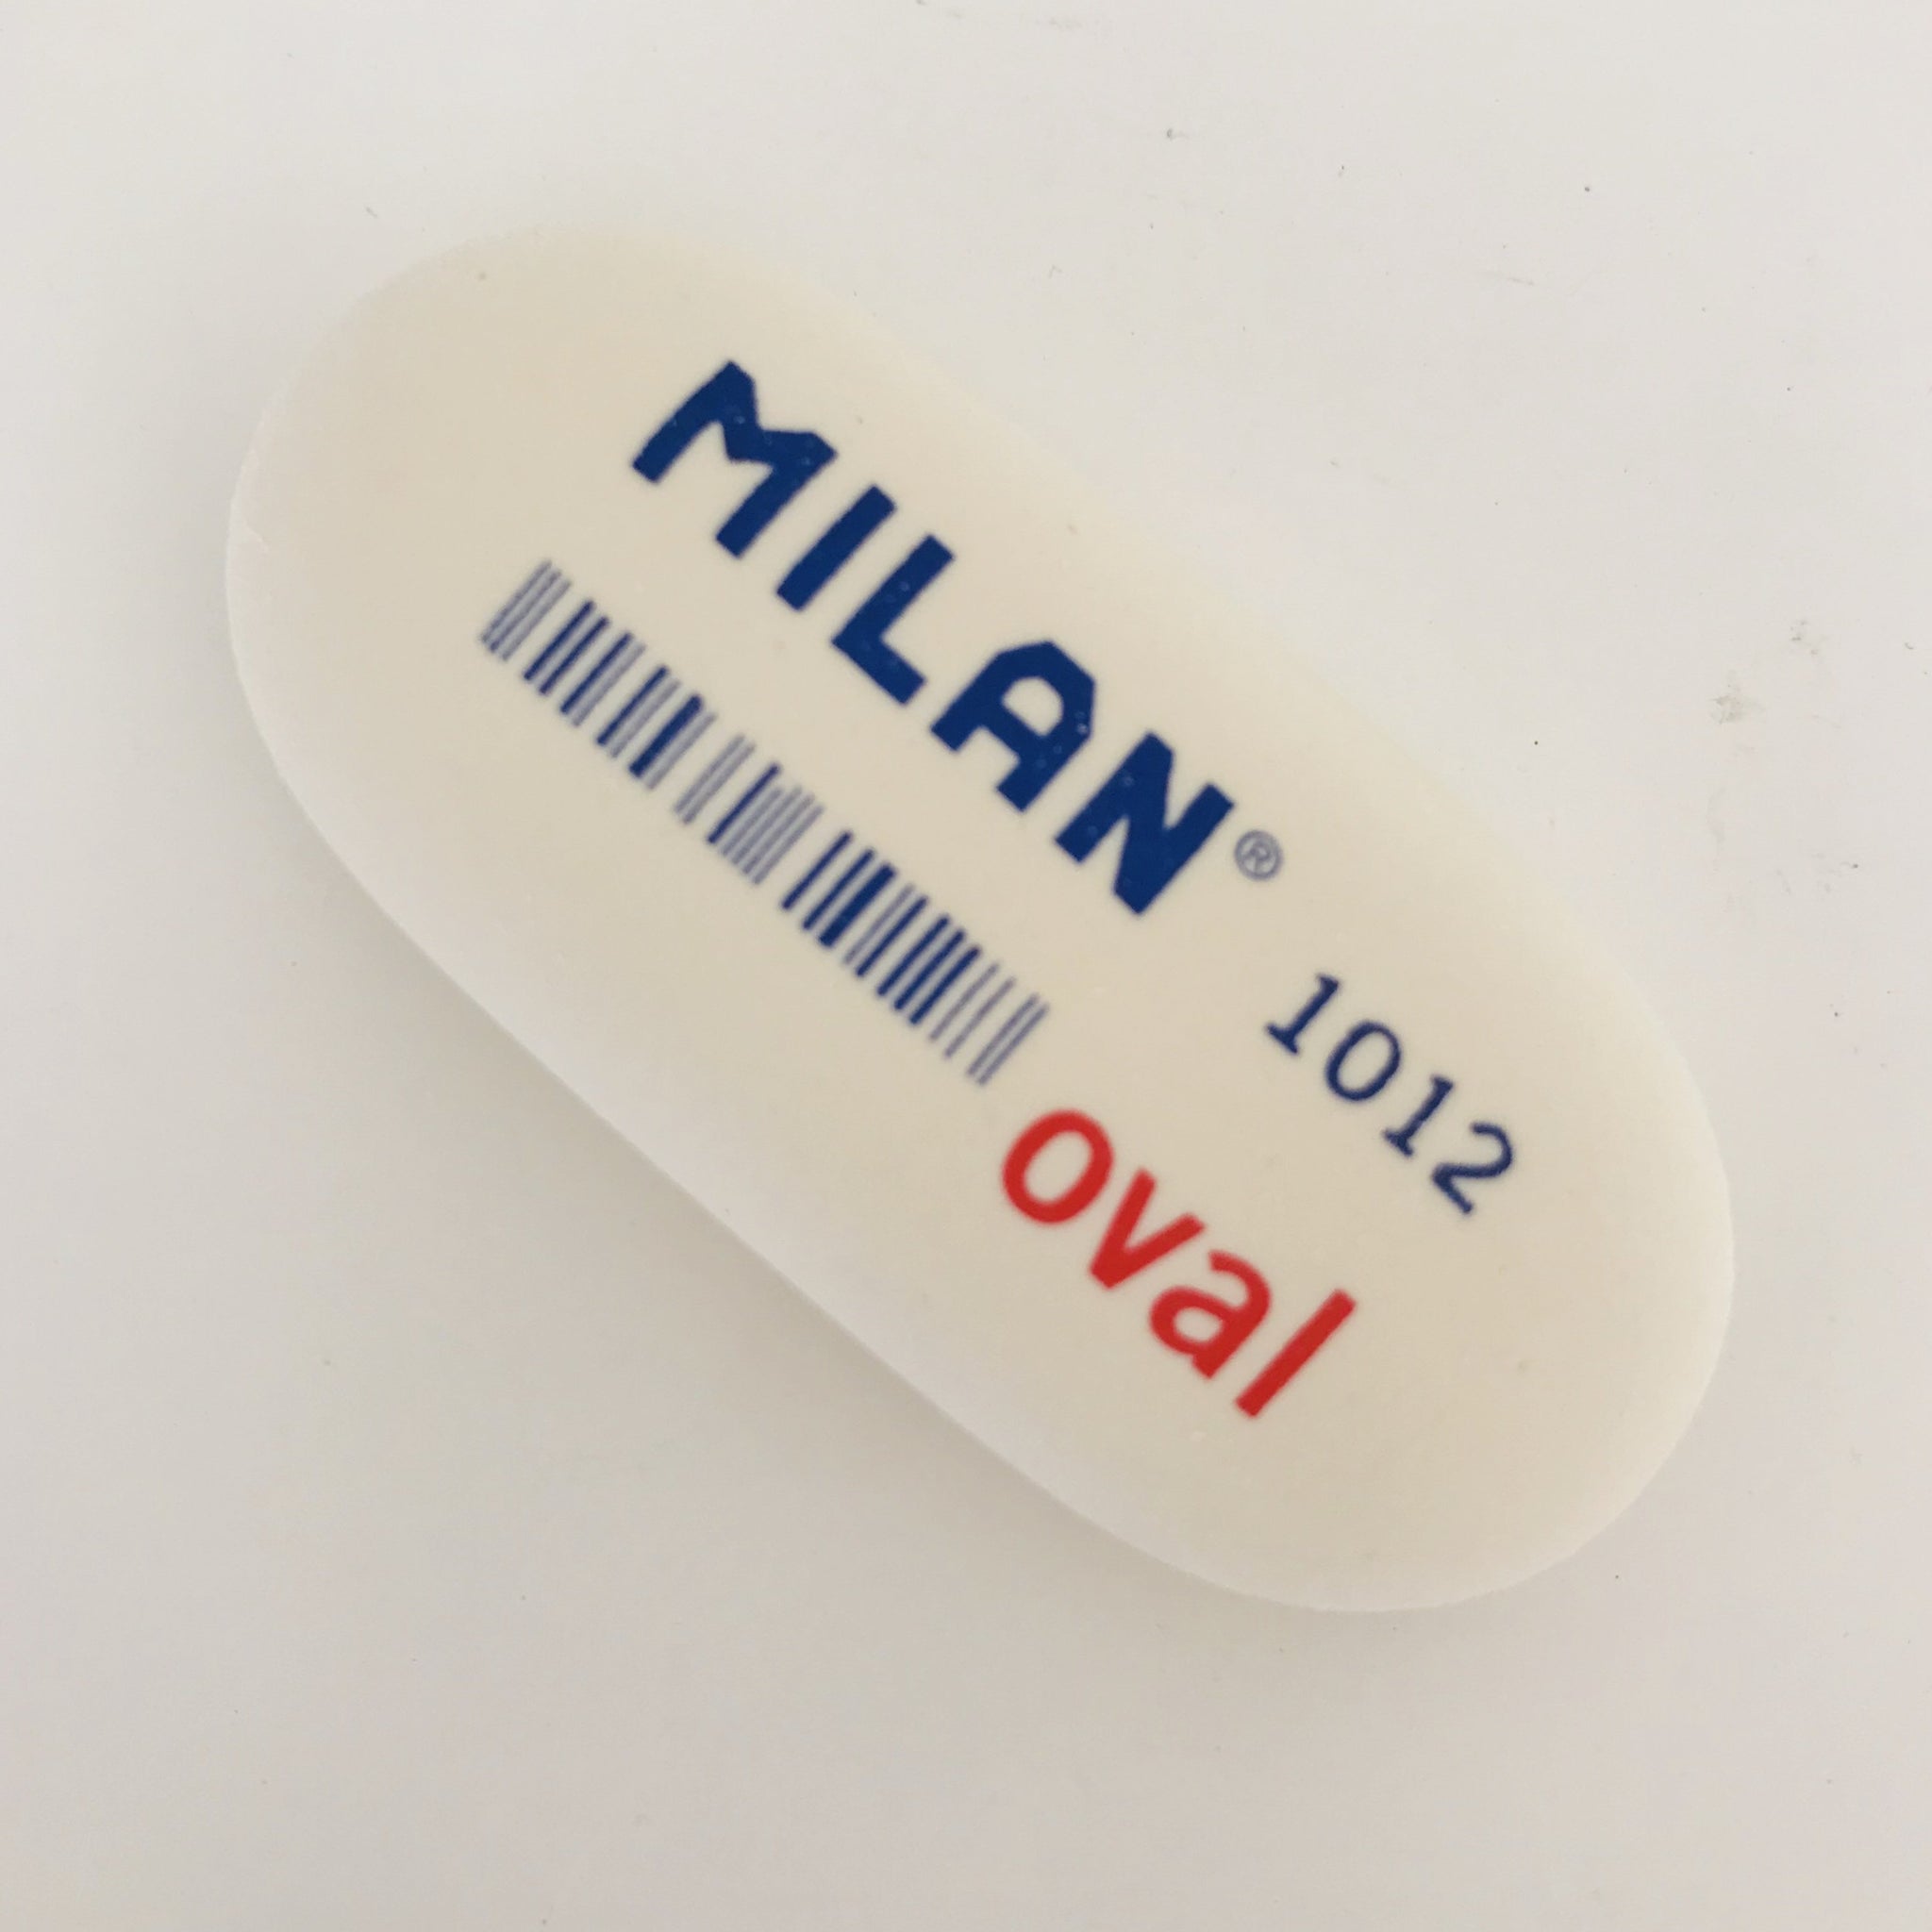 Borracha Milan 1012 ... Milan 1012 Eraser